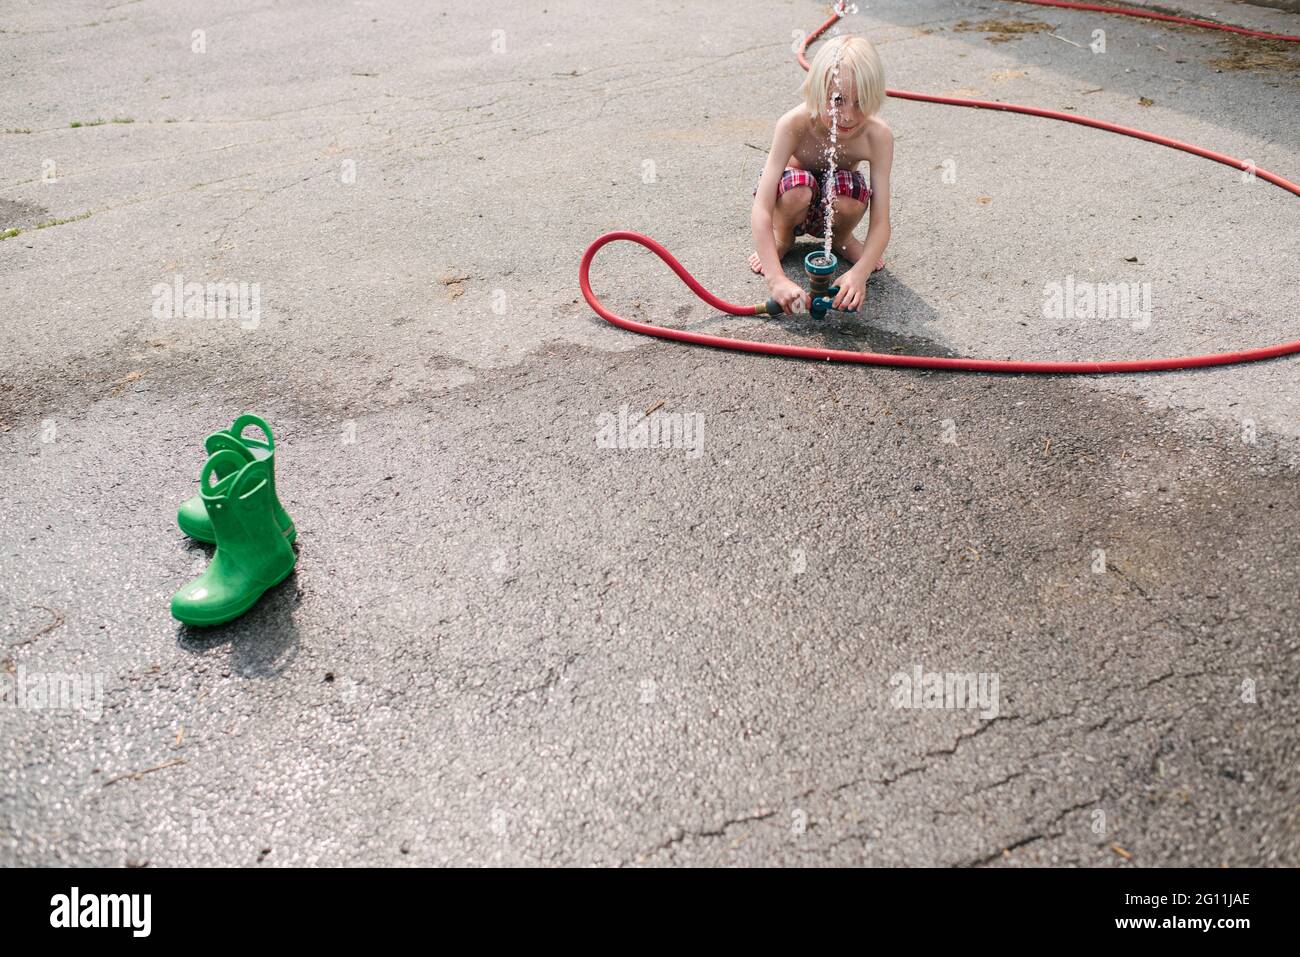 Canada, Ontario, Kingston, Shirtless boy playing with gardening hose Stock Photo